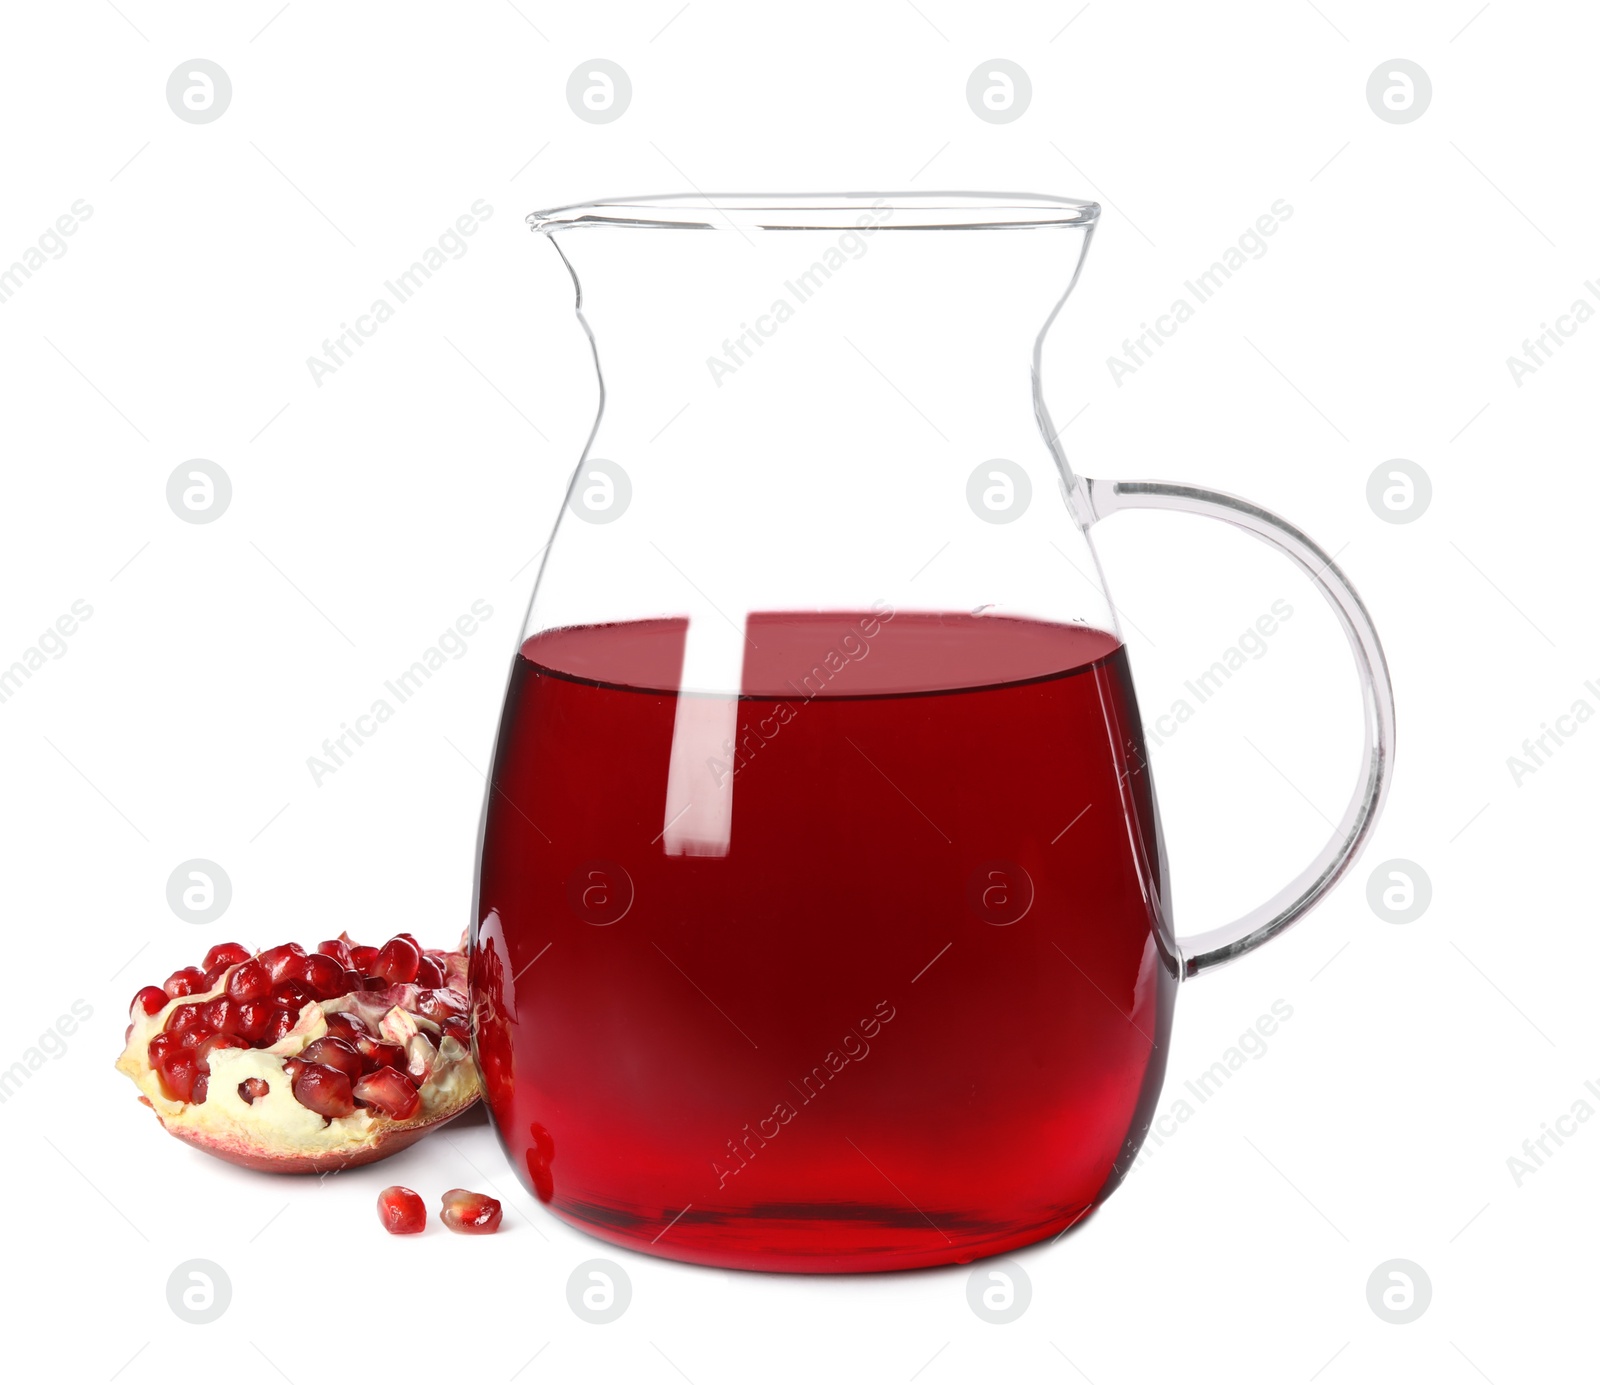 Photo of Freshly made pomegranate juice in jug on white background